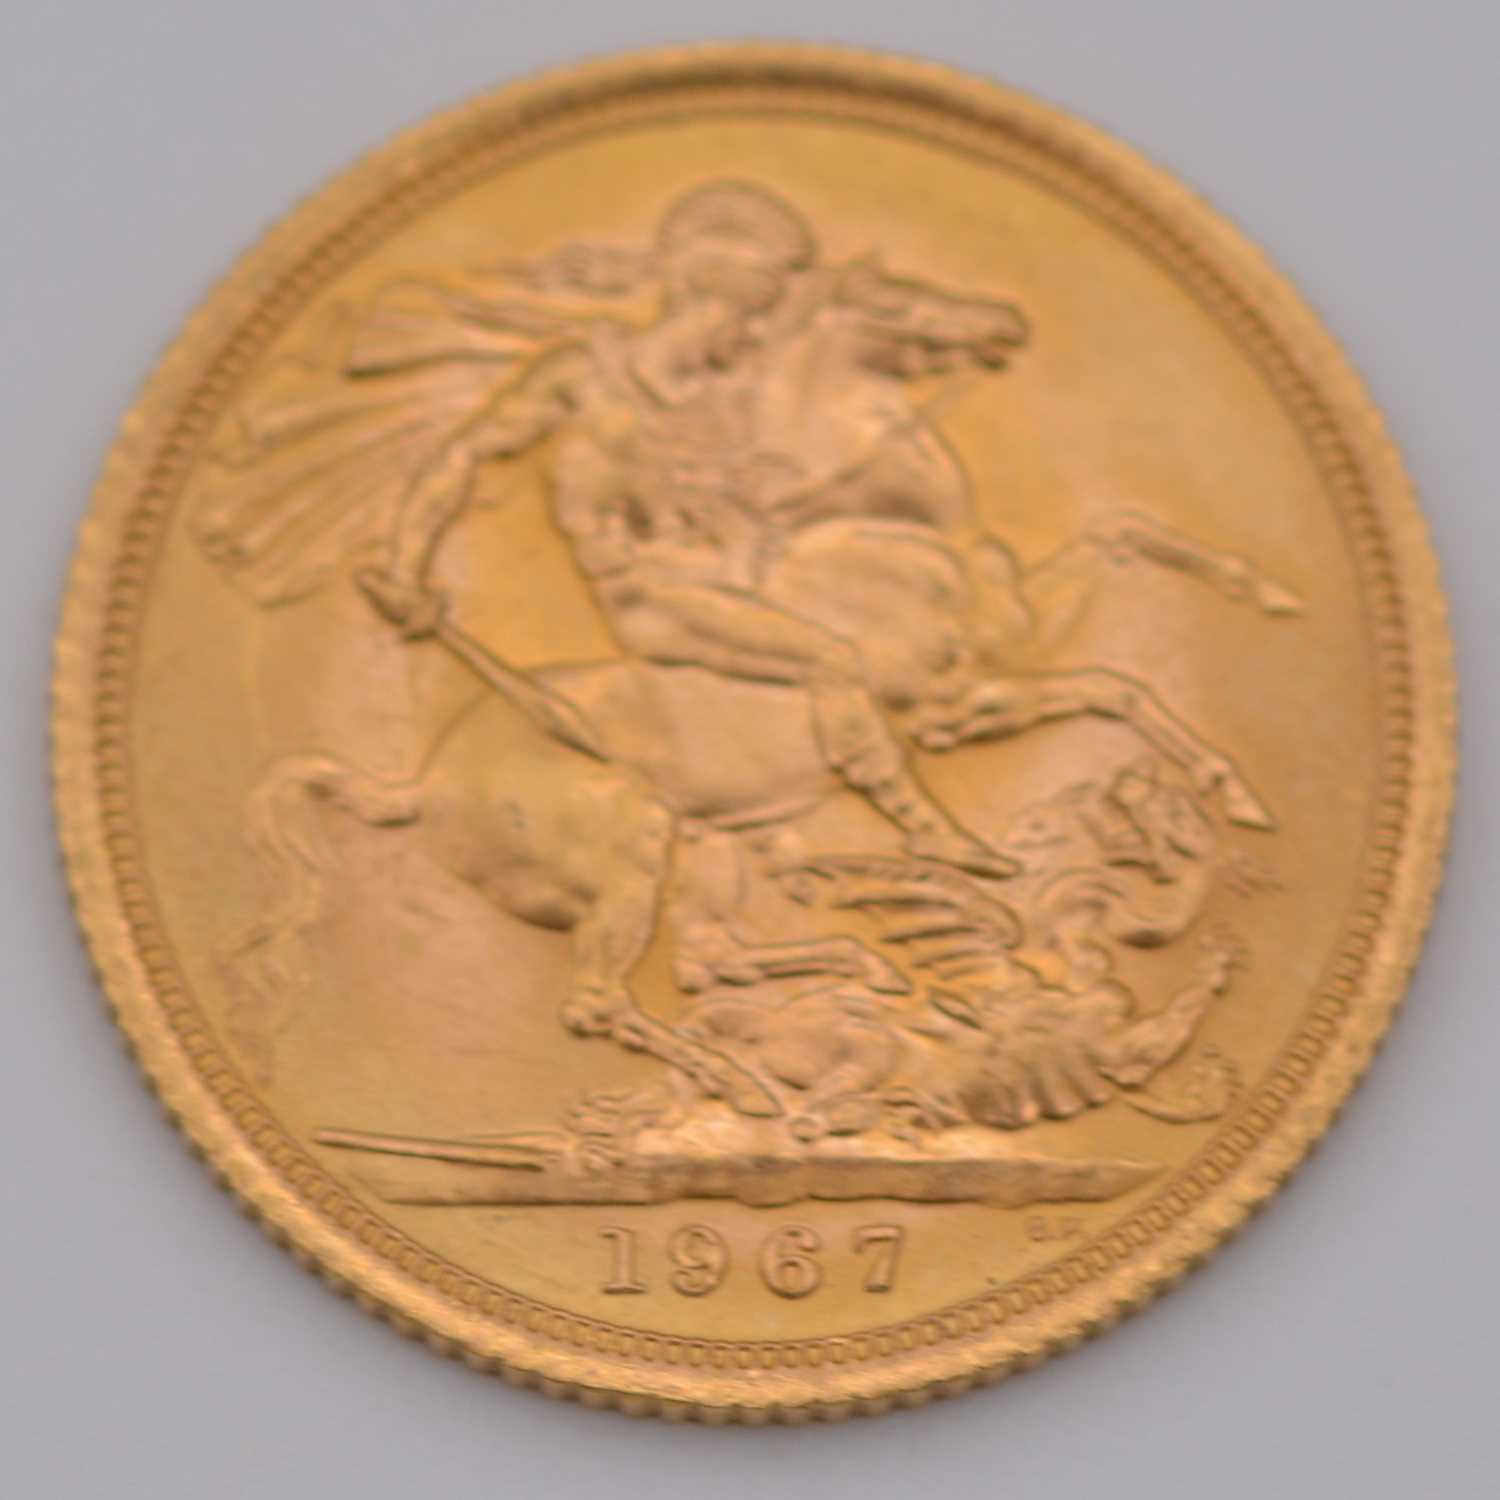 Lot 168 - Elizabeth II gold Sovereign coin, 1967, 8g.